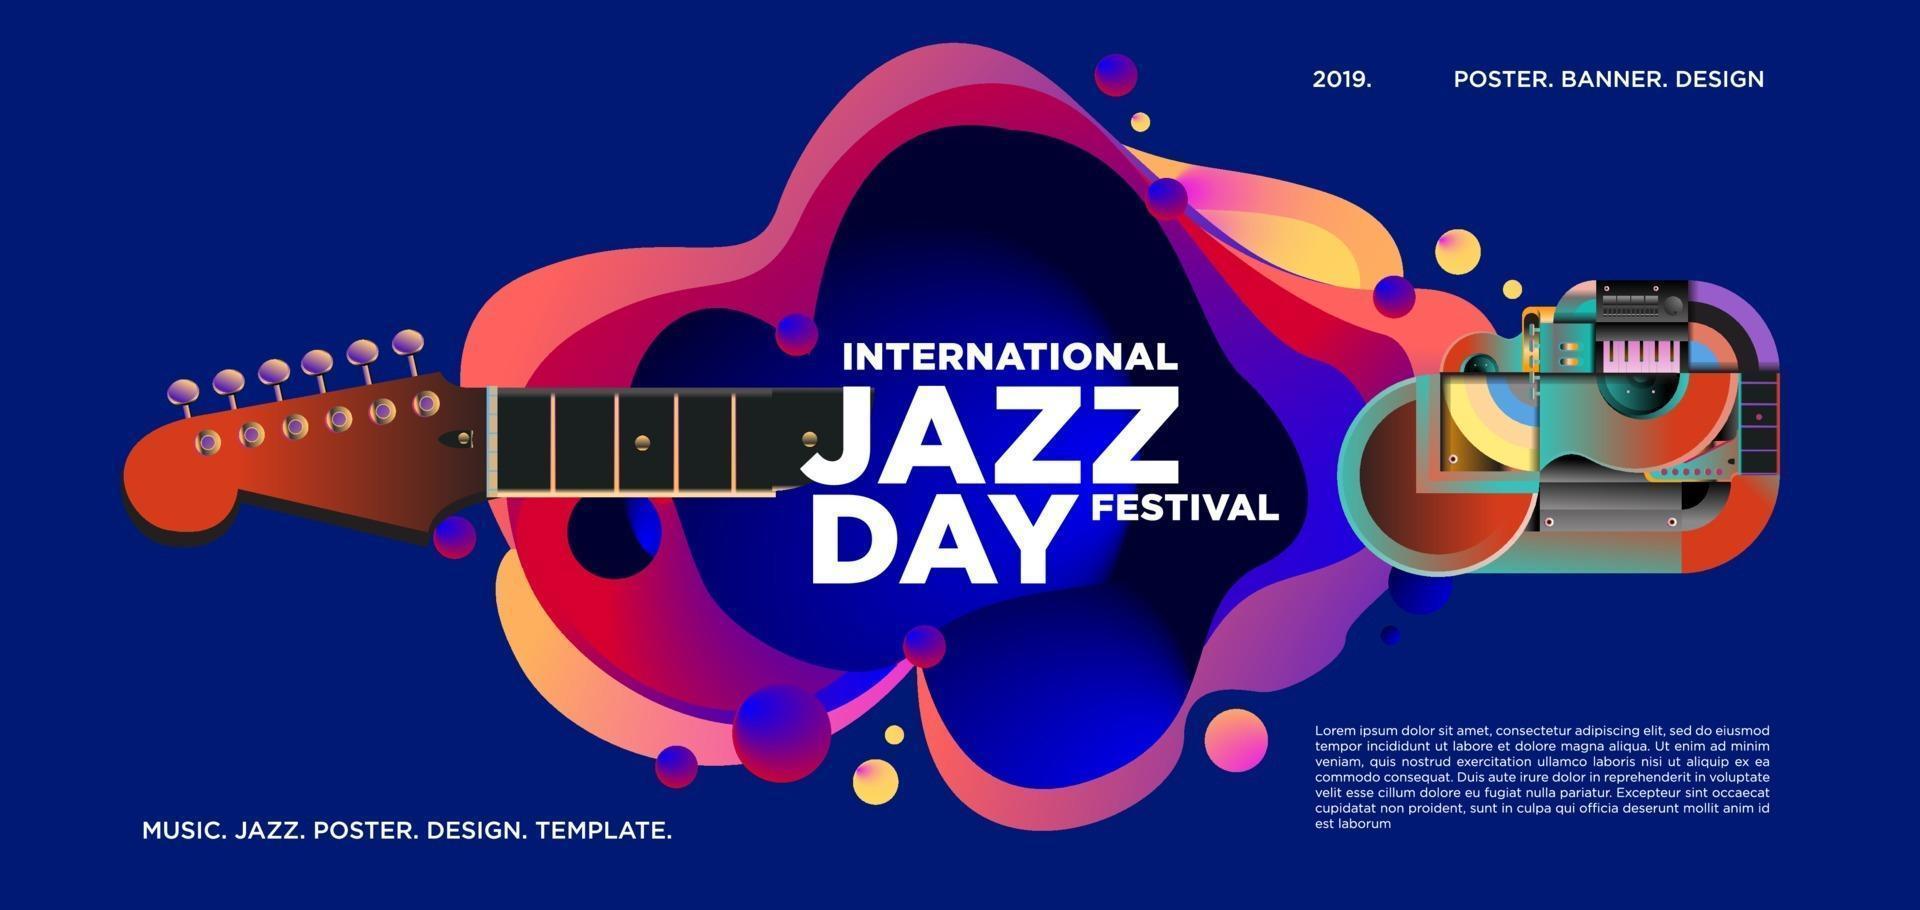 Vector colorful international jazz day banner design